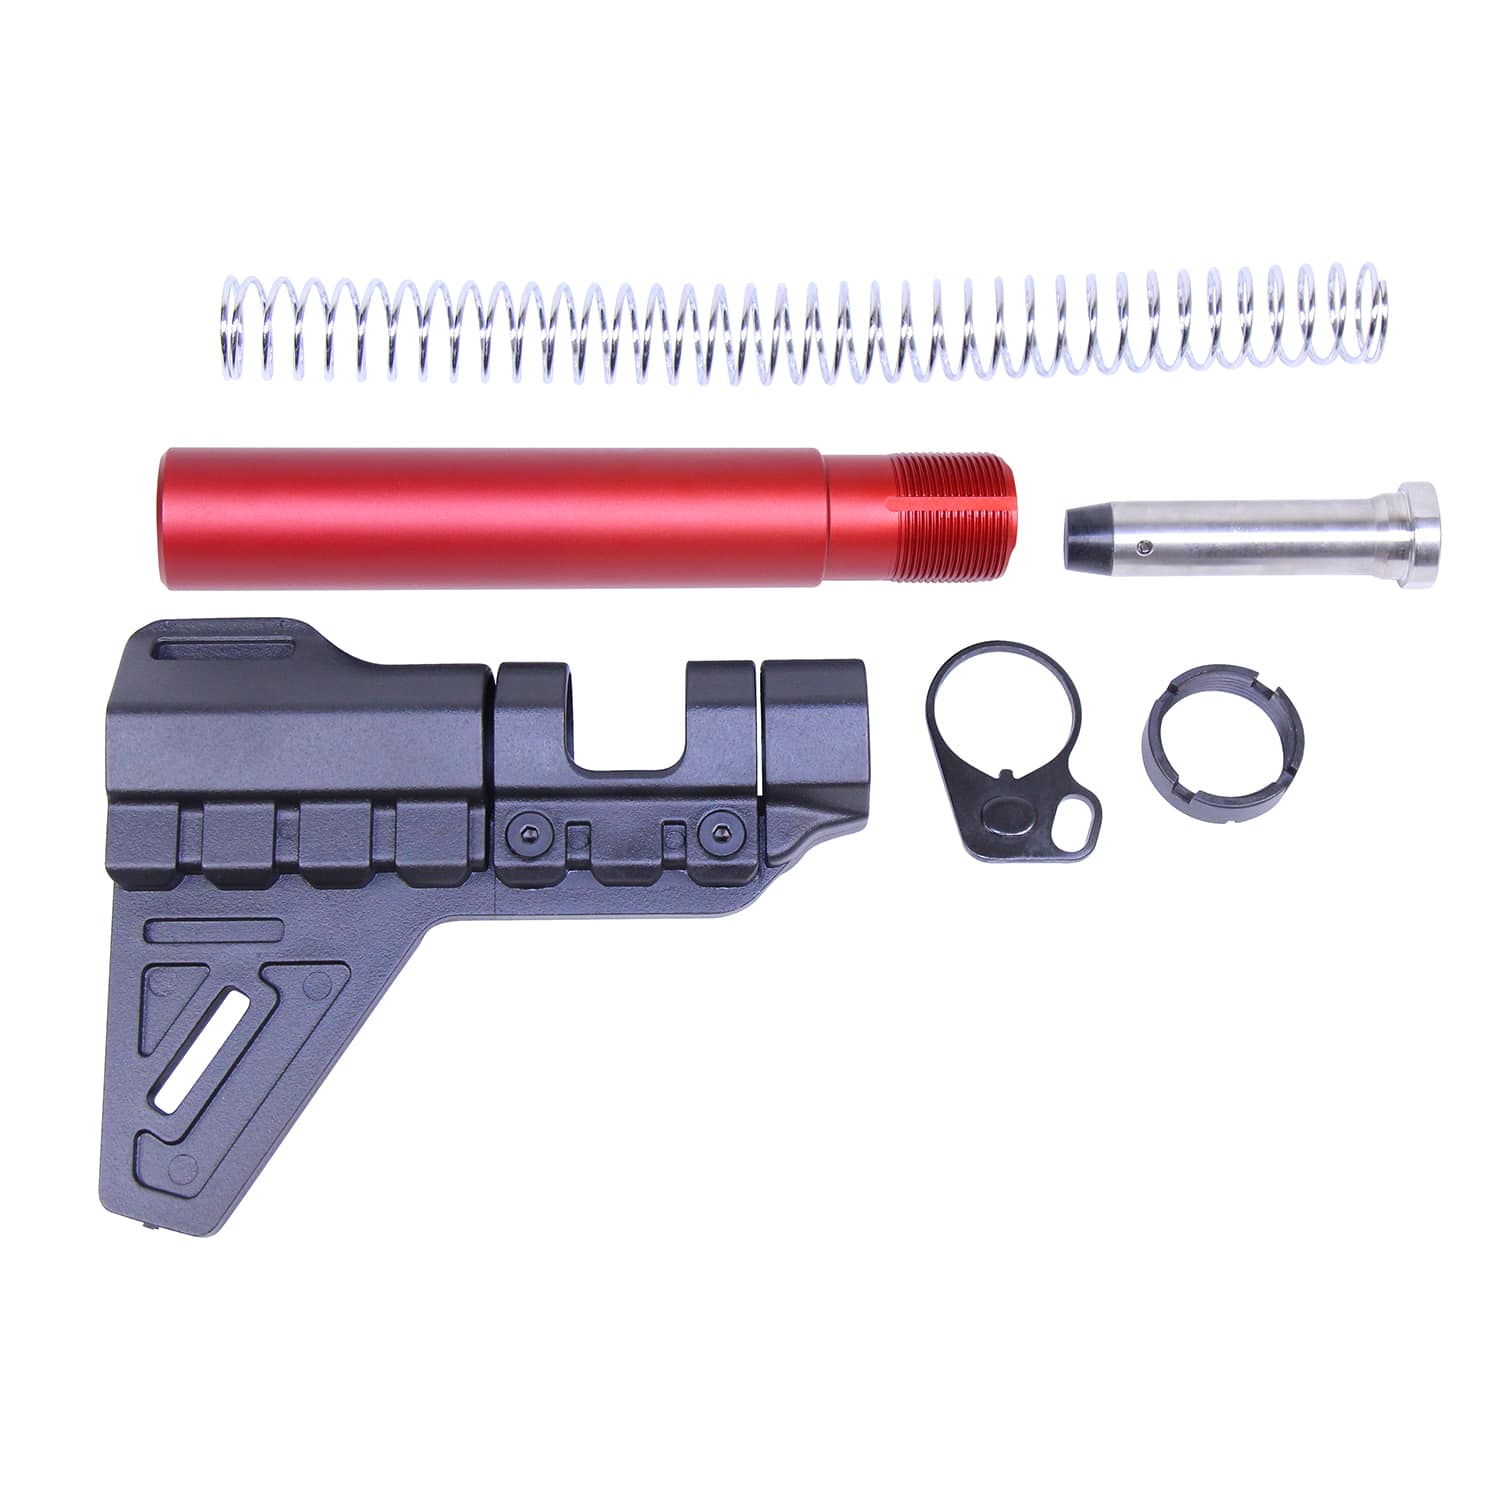 AR-15 Micro Breach Pistol Brace Set in Anodized Red